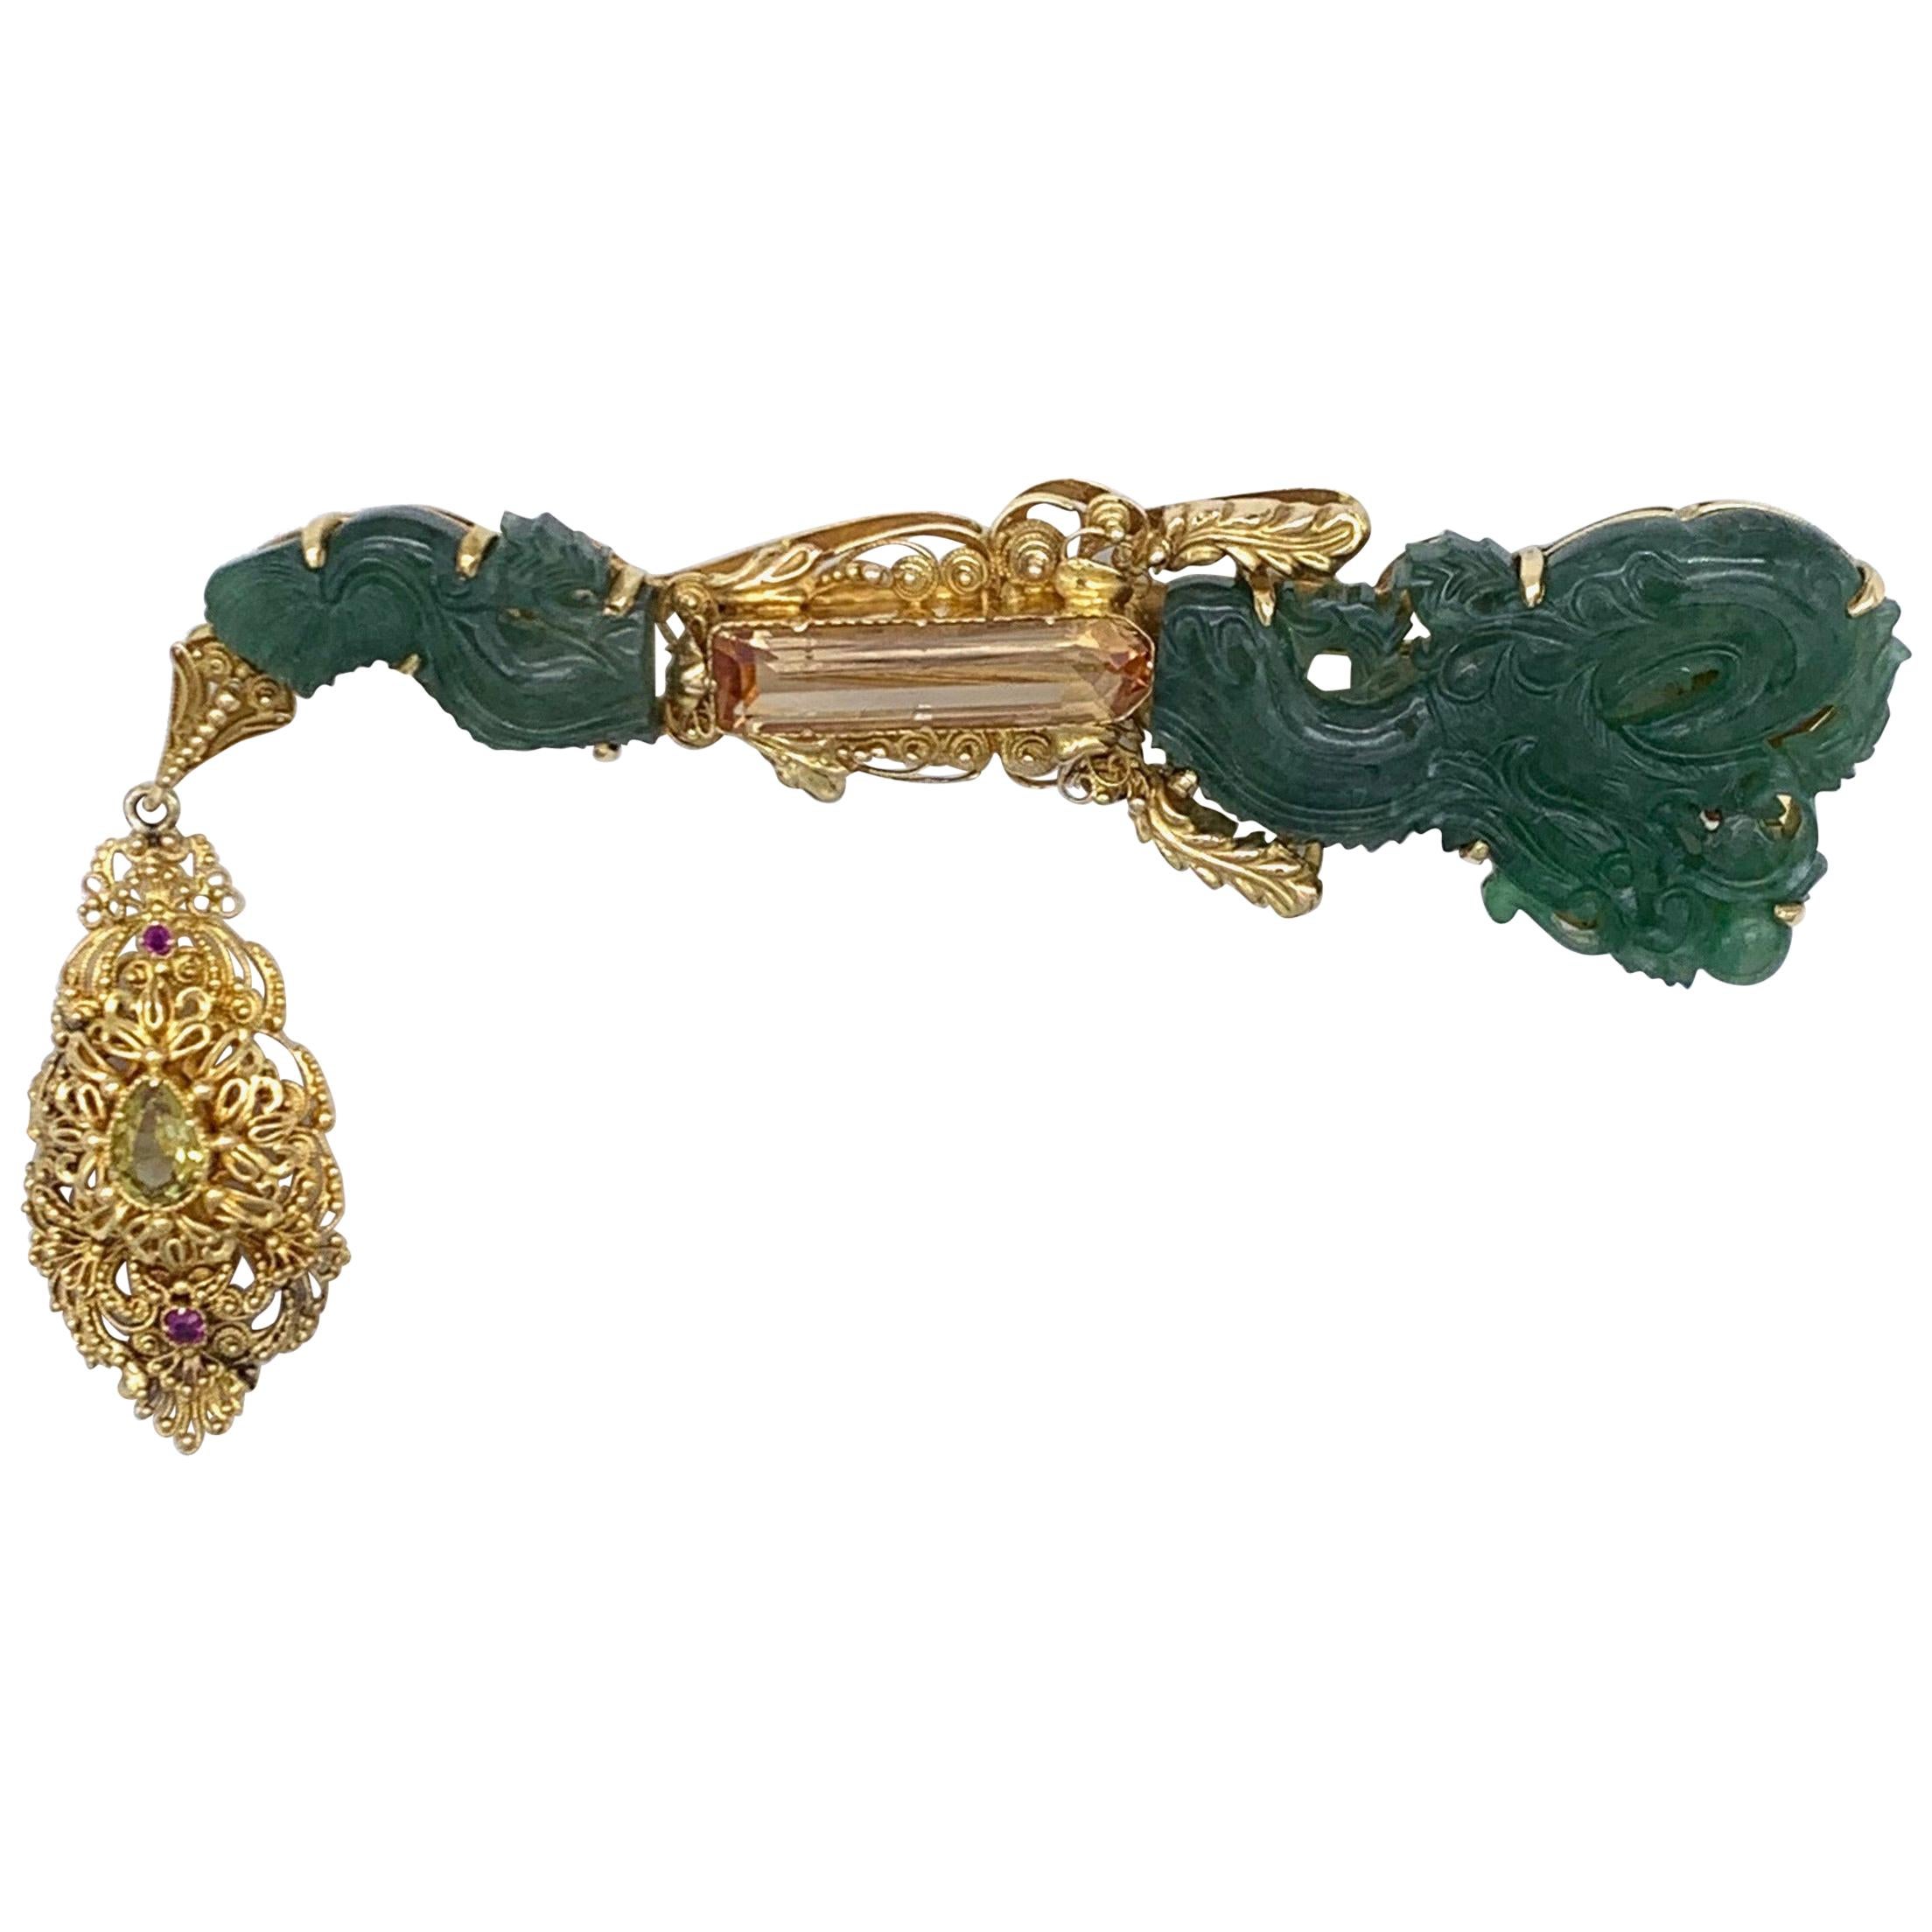 Vintage Dragon Carved Jadeite Topas Ruby 18 Karat Gold Brooch with Pendant